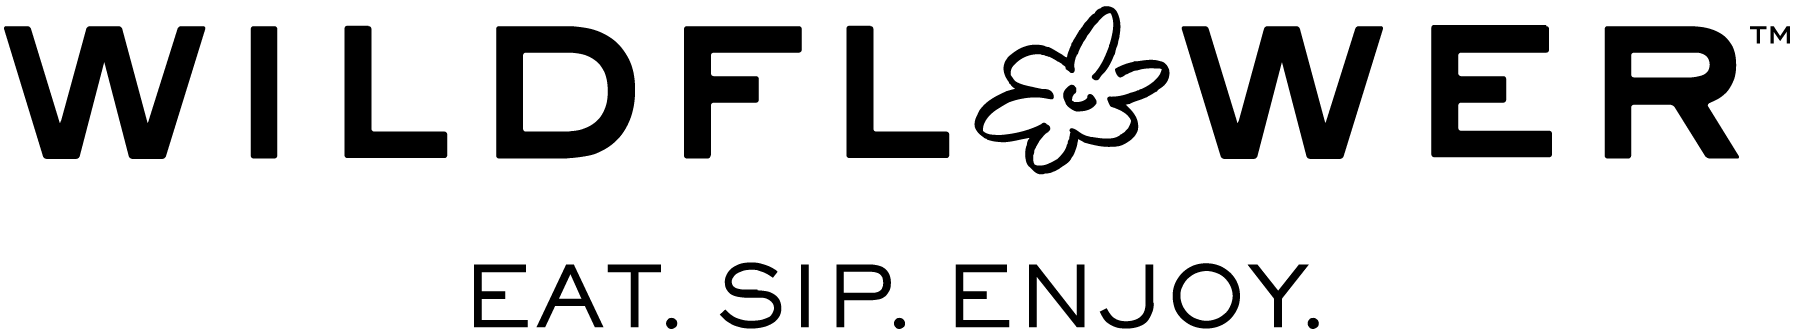 WF-Logo-2018-K-tag